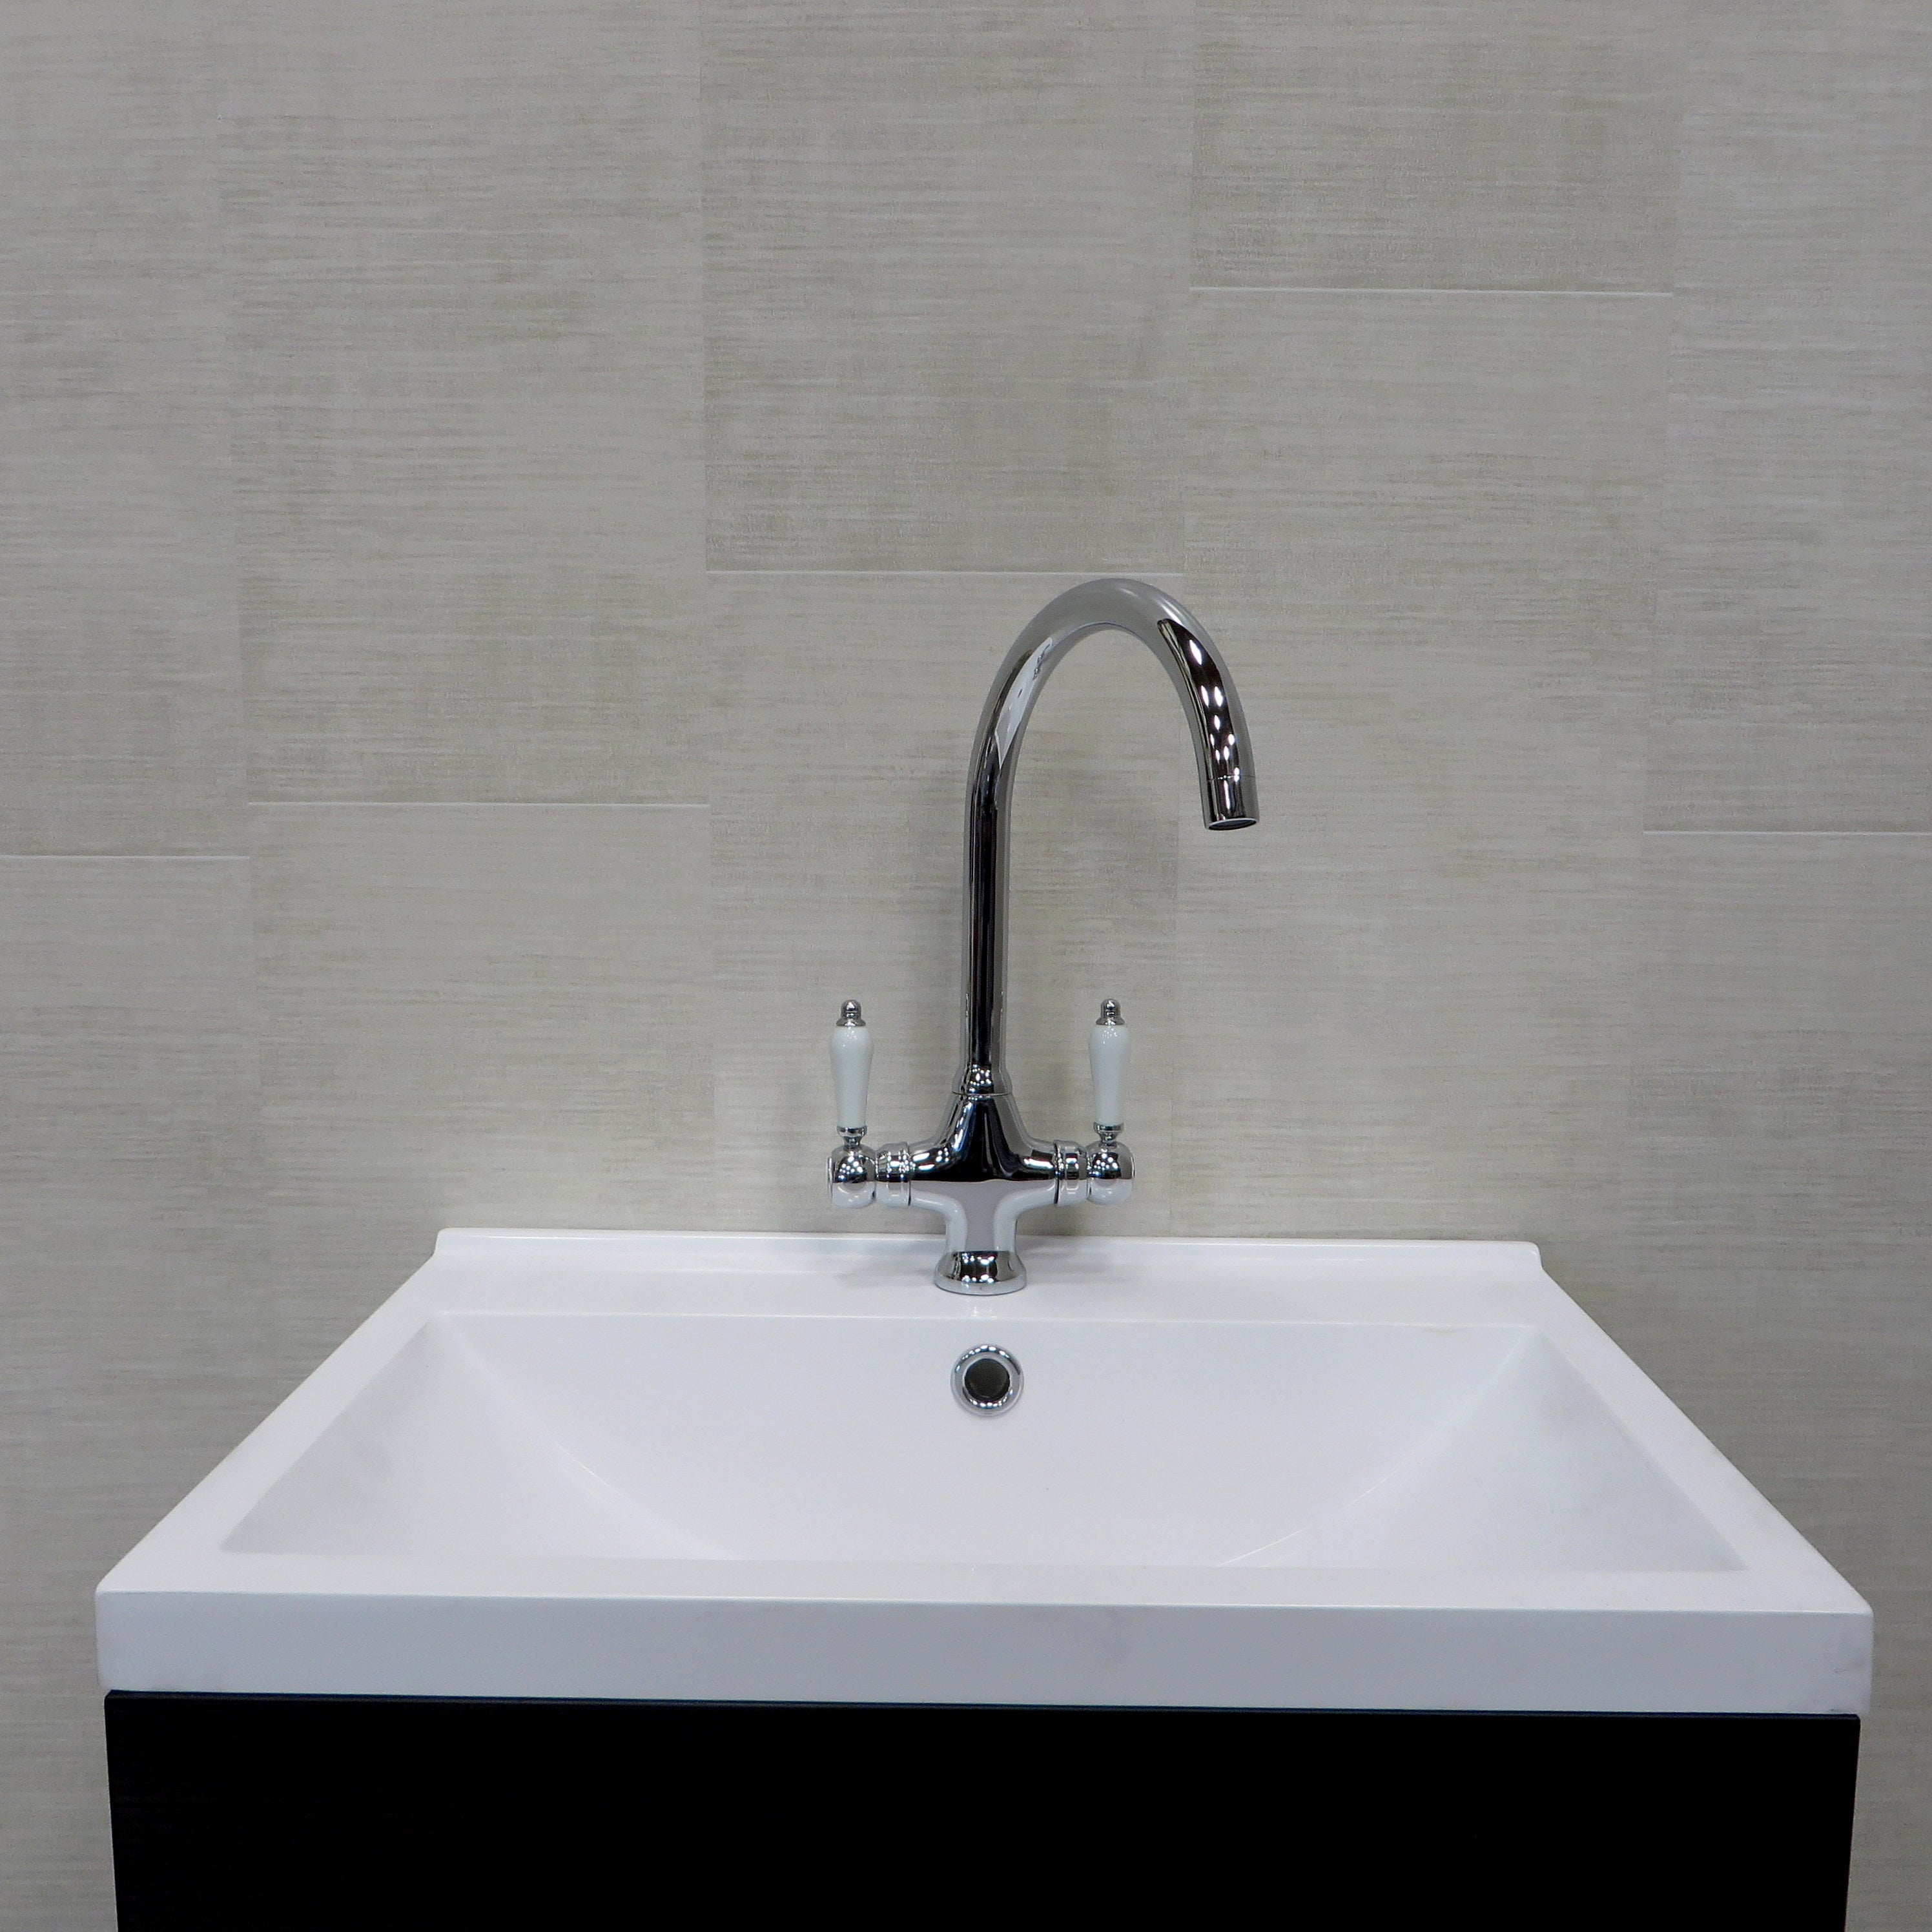 Sample of Light Grey Large Tile 5mm Bathroom Cladding Wet Wall Panels